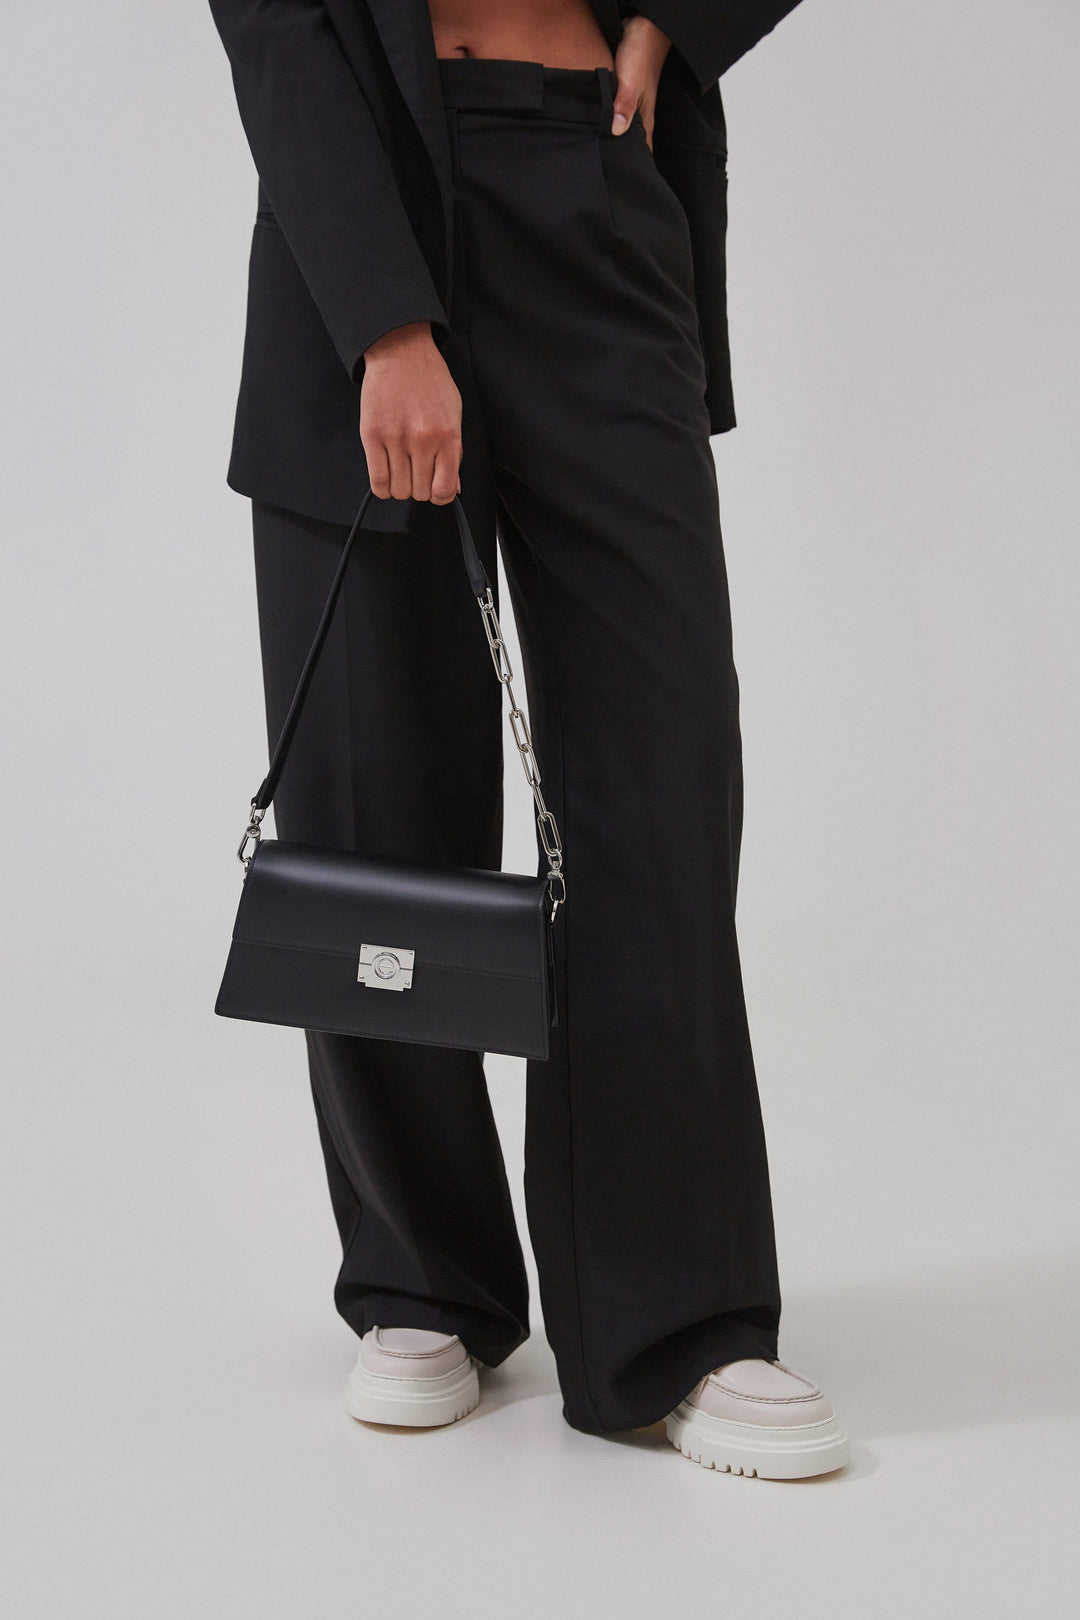 Estro women's leather handbag in black colour - presentation on a model.